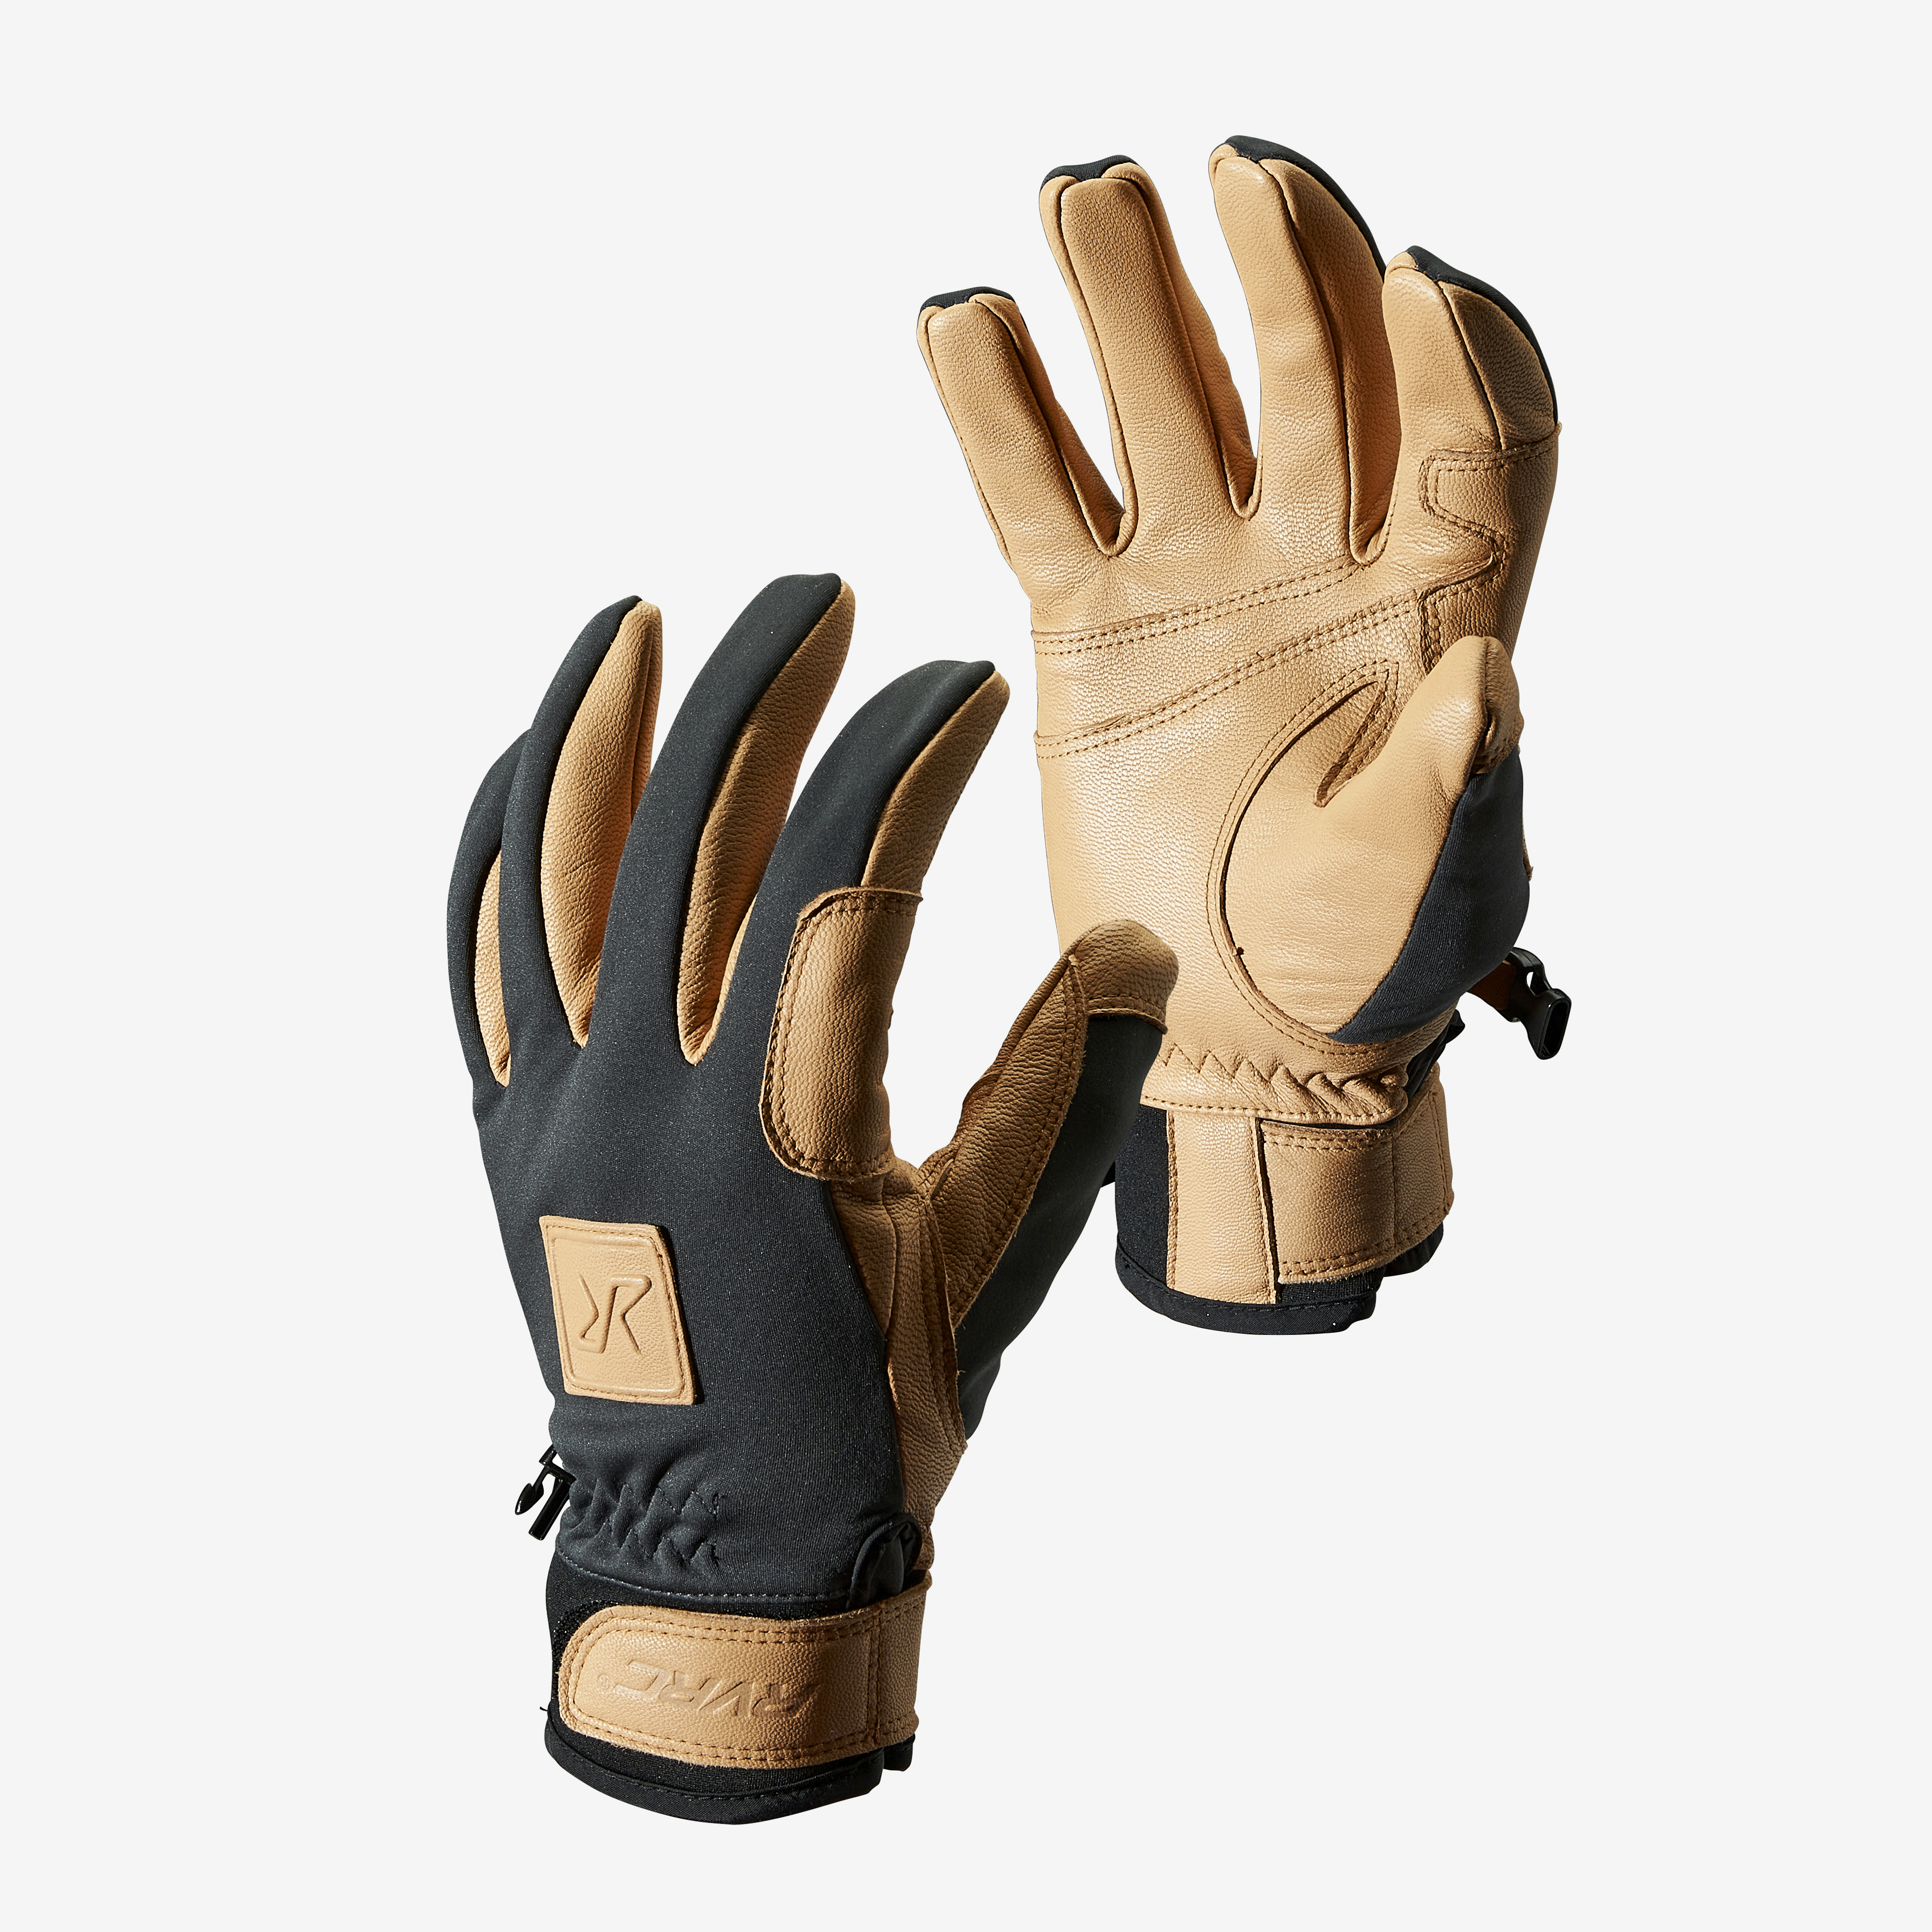 Outdoor Glove Unisex Tan/Anthracite Storlek:G9 – Accessoarer > Handskar